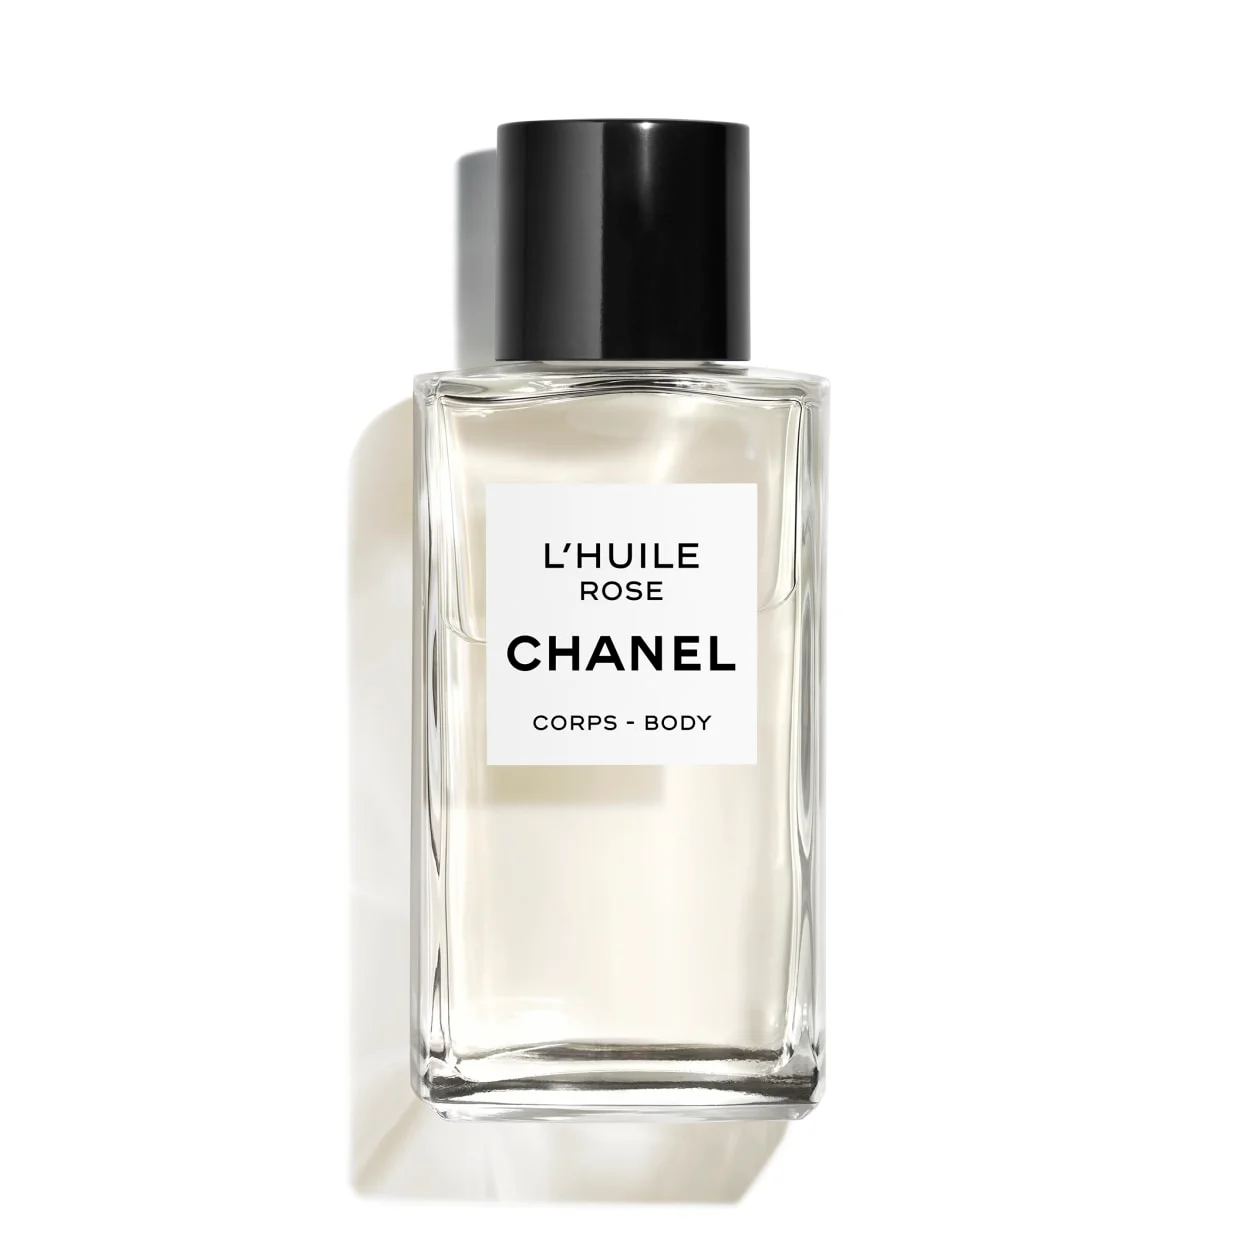 Chanel - Allure Homme Sport Eau De Toilette Travel Spray (With Two